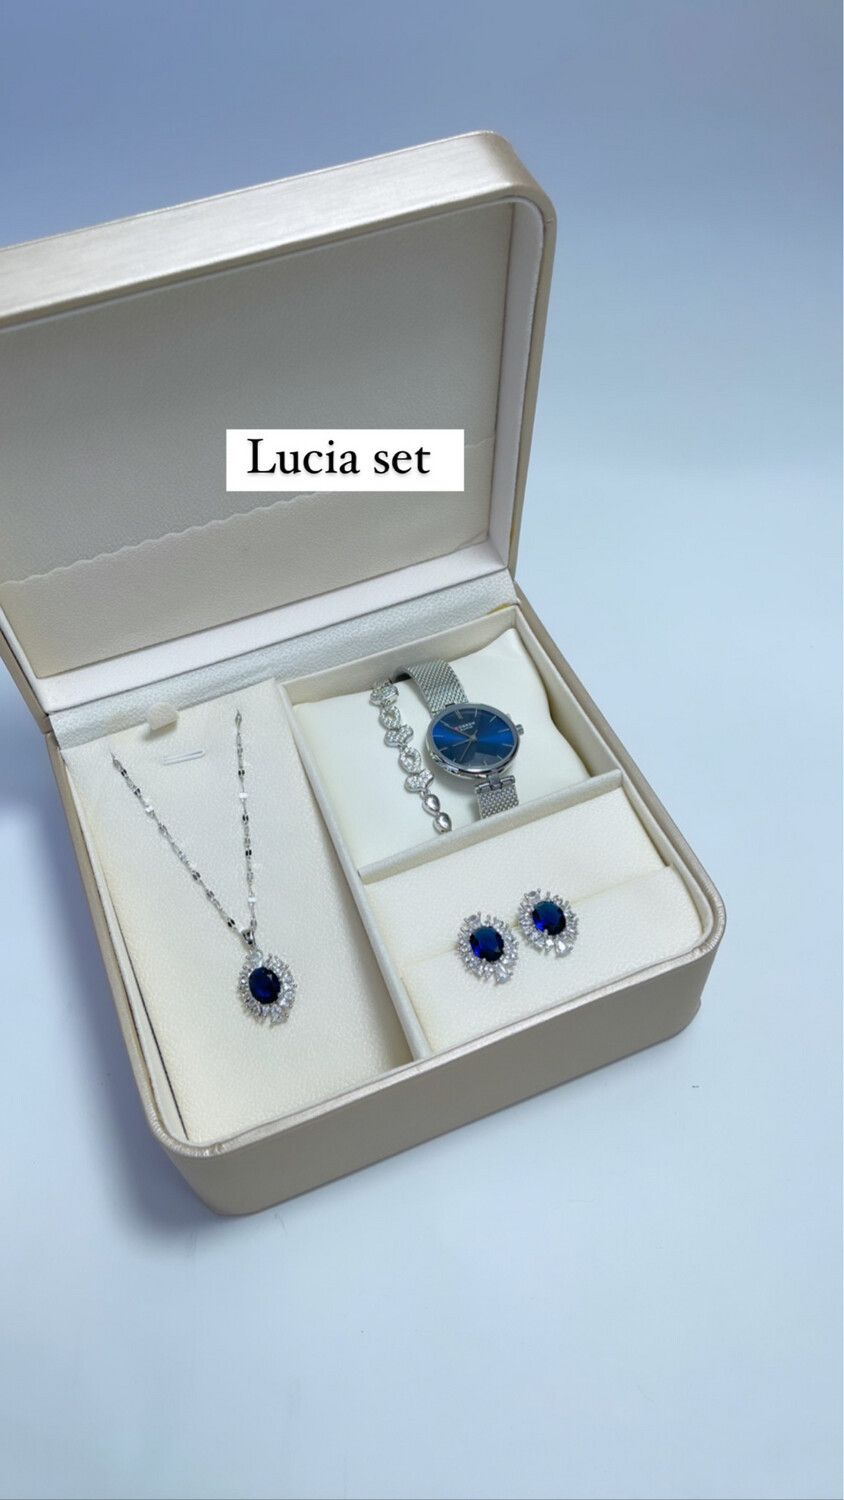 Lucia Gift Set